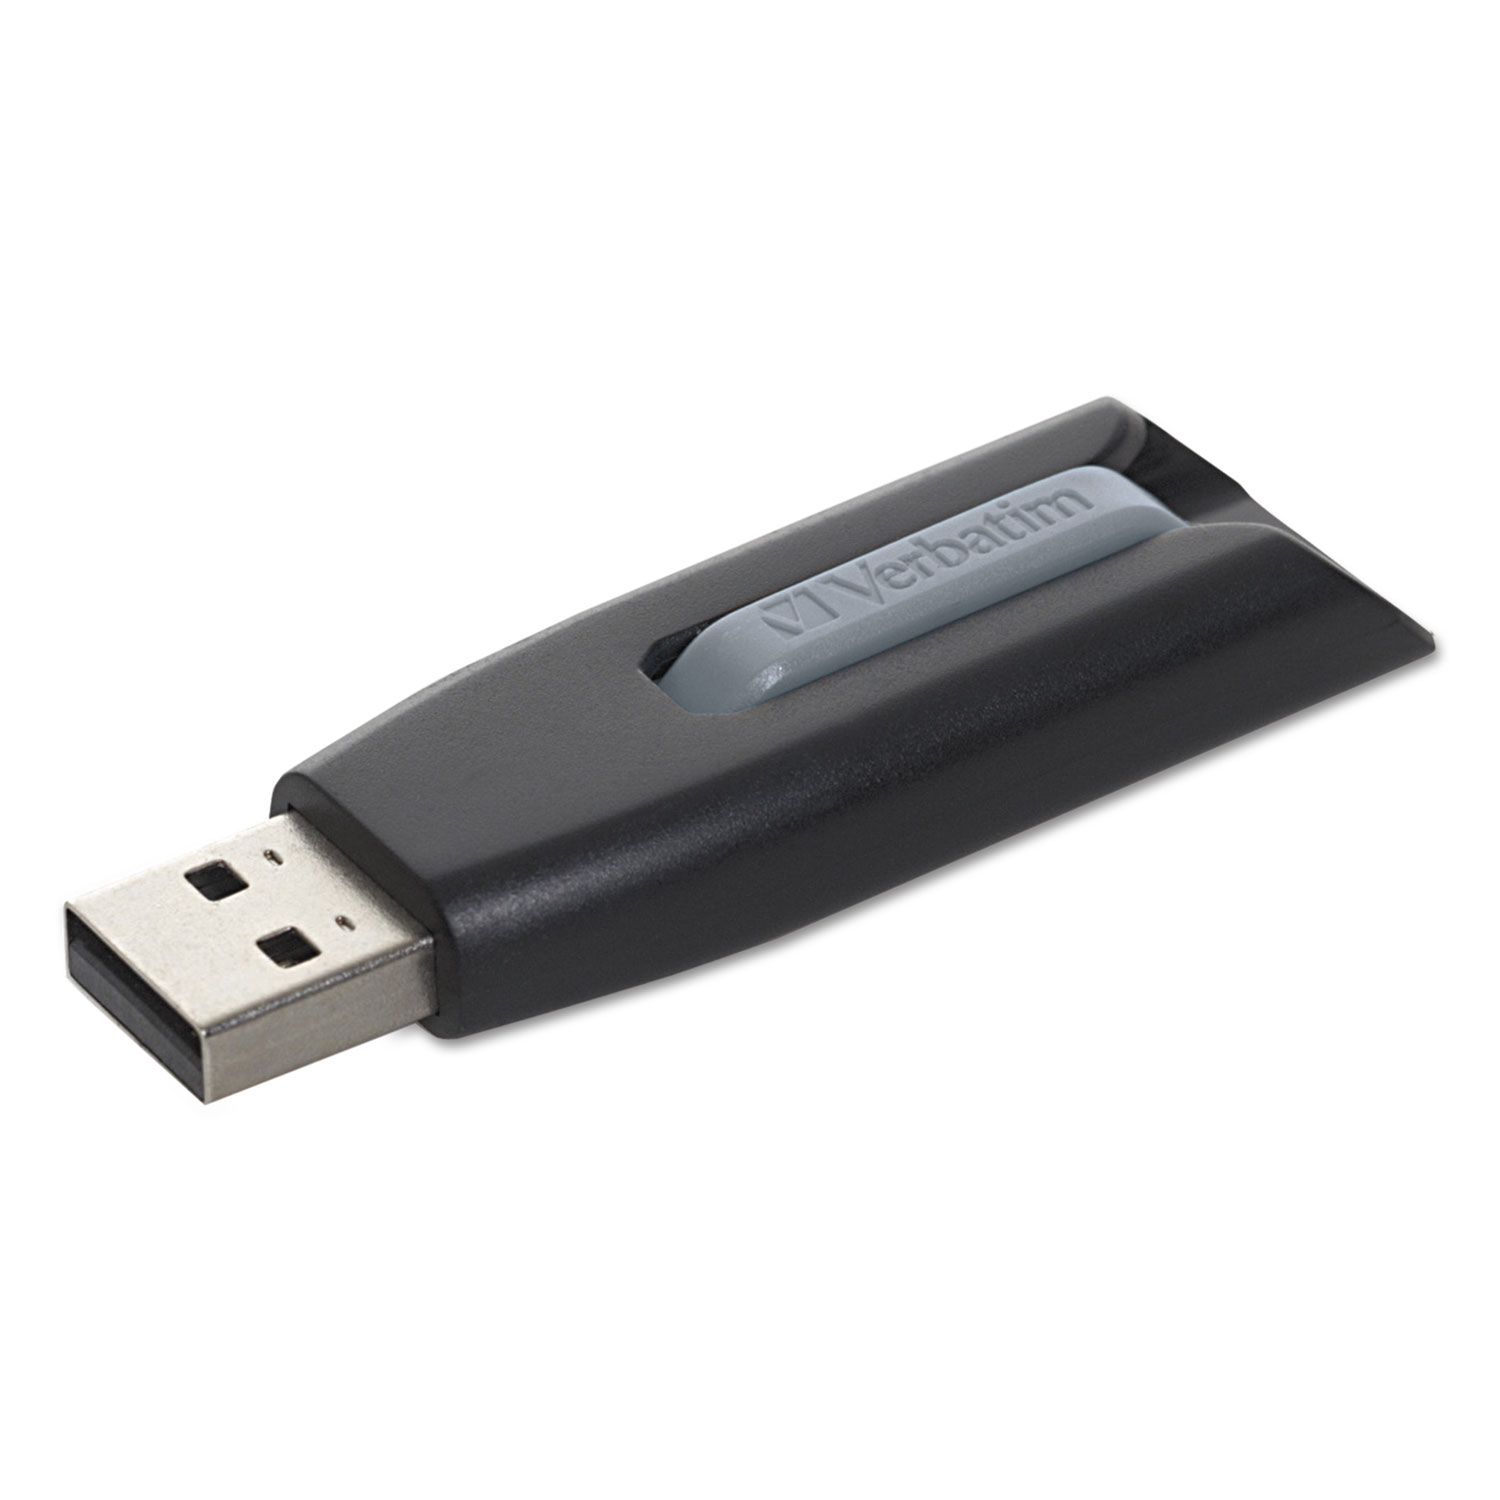 Store n Go V3 USB 3.0 Drive, 256GB, Black/Gray